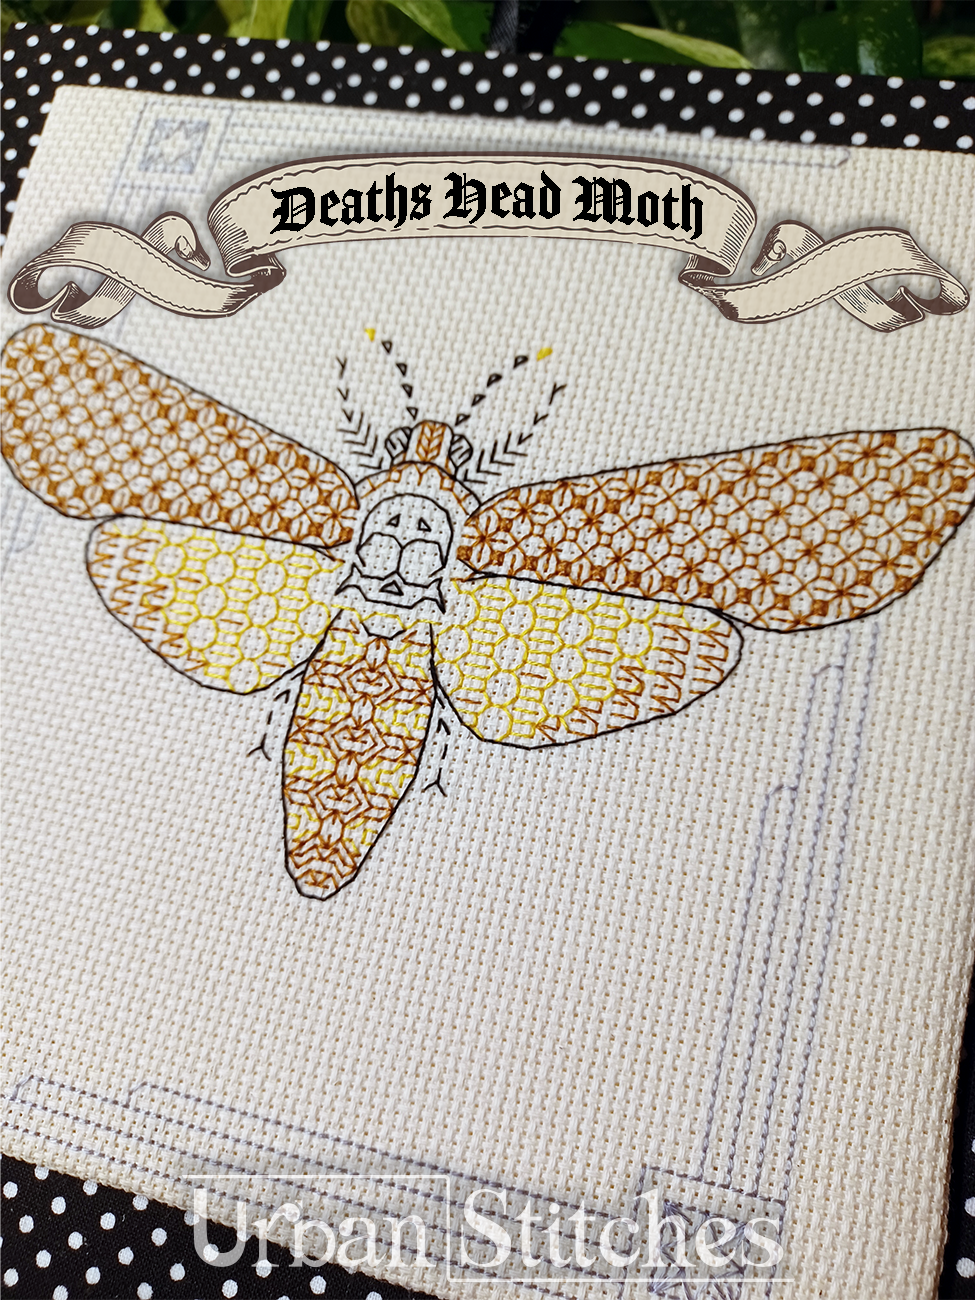 Deaths Head Moth Blackwork